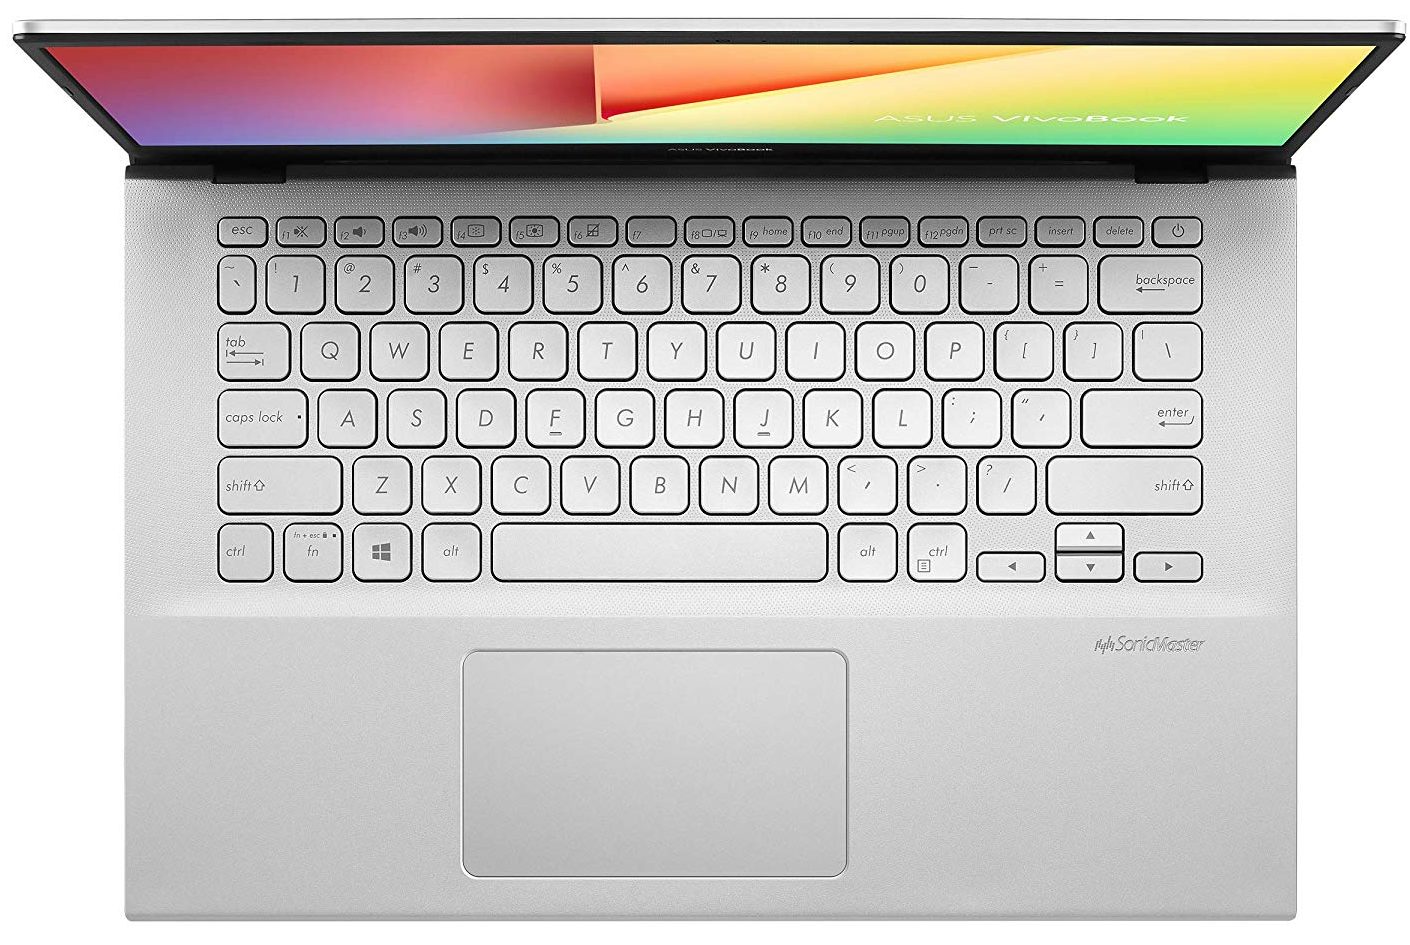 ASUS VivoBook S14 S412 - Specs, Tests, and Prices | LaptopMedia.com